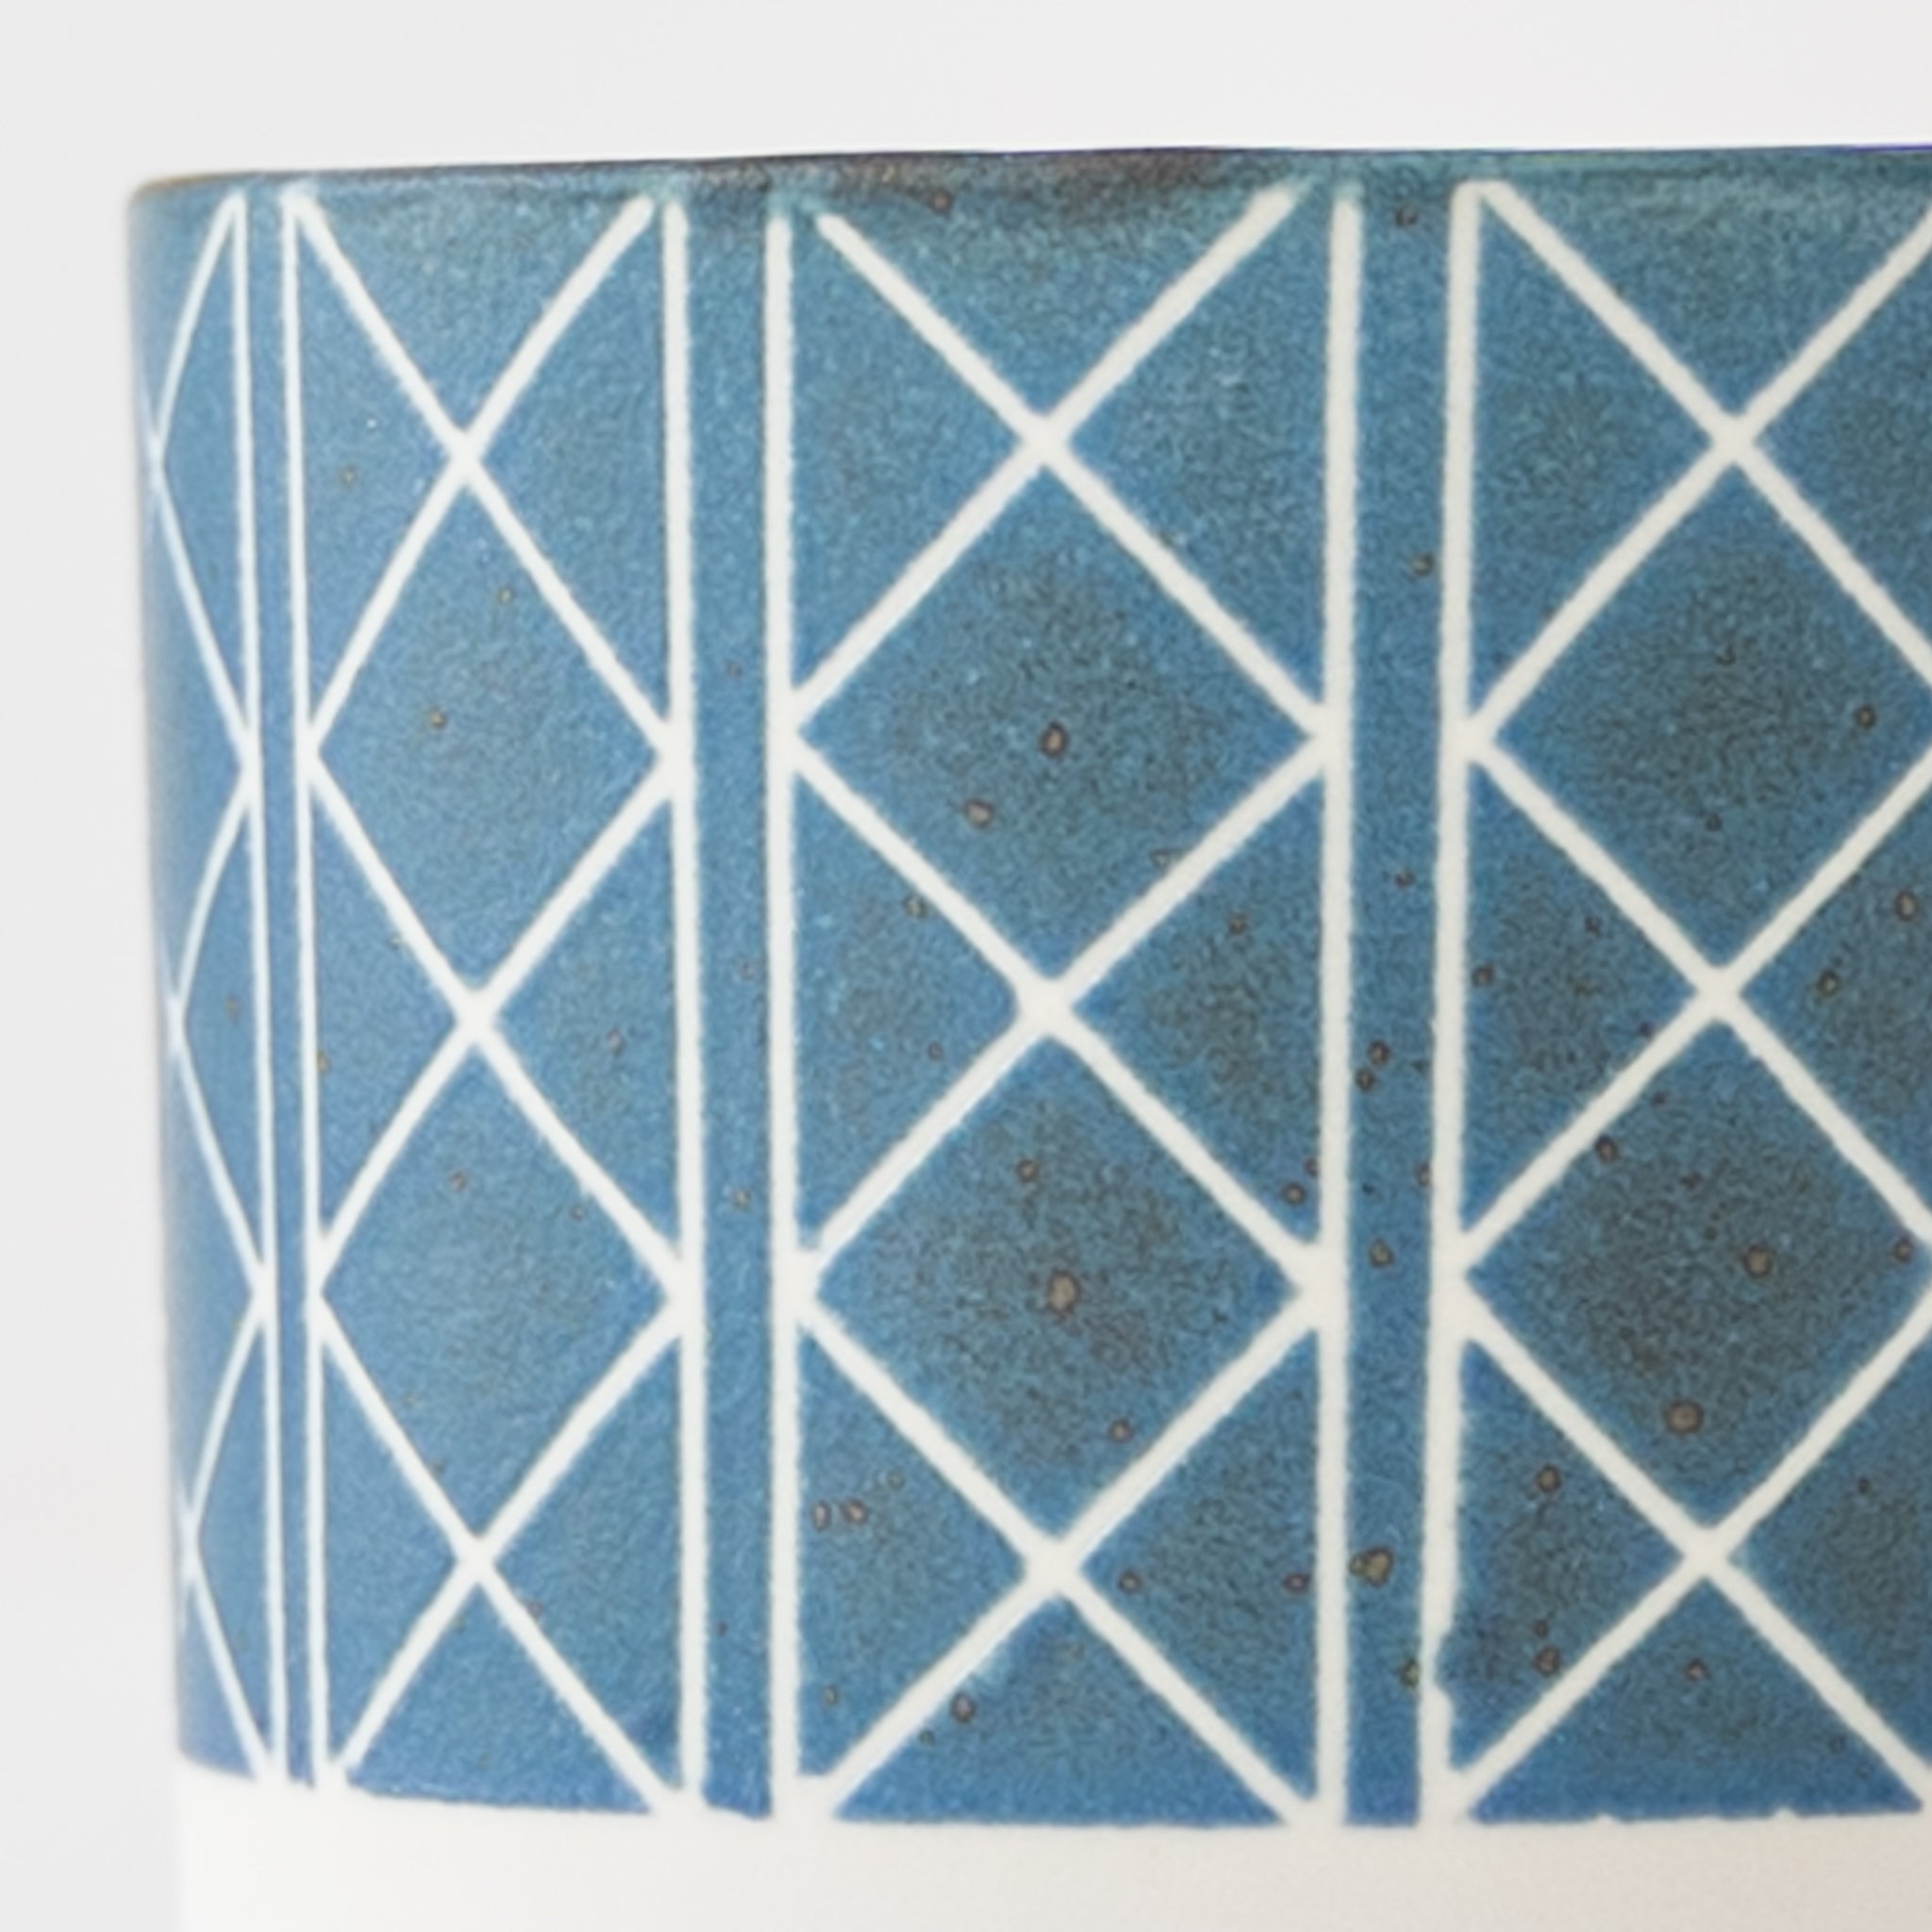 Yukari Nakagawa's mug with a nice geometric pattern and calm blue